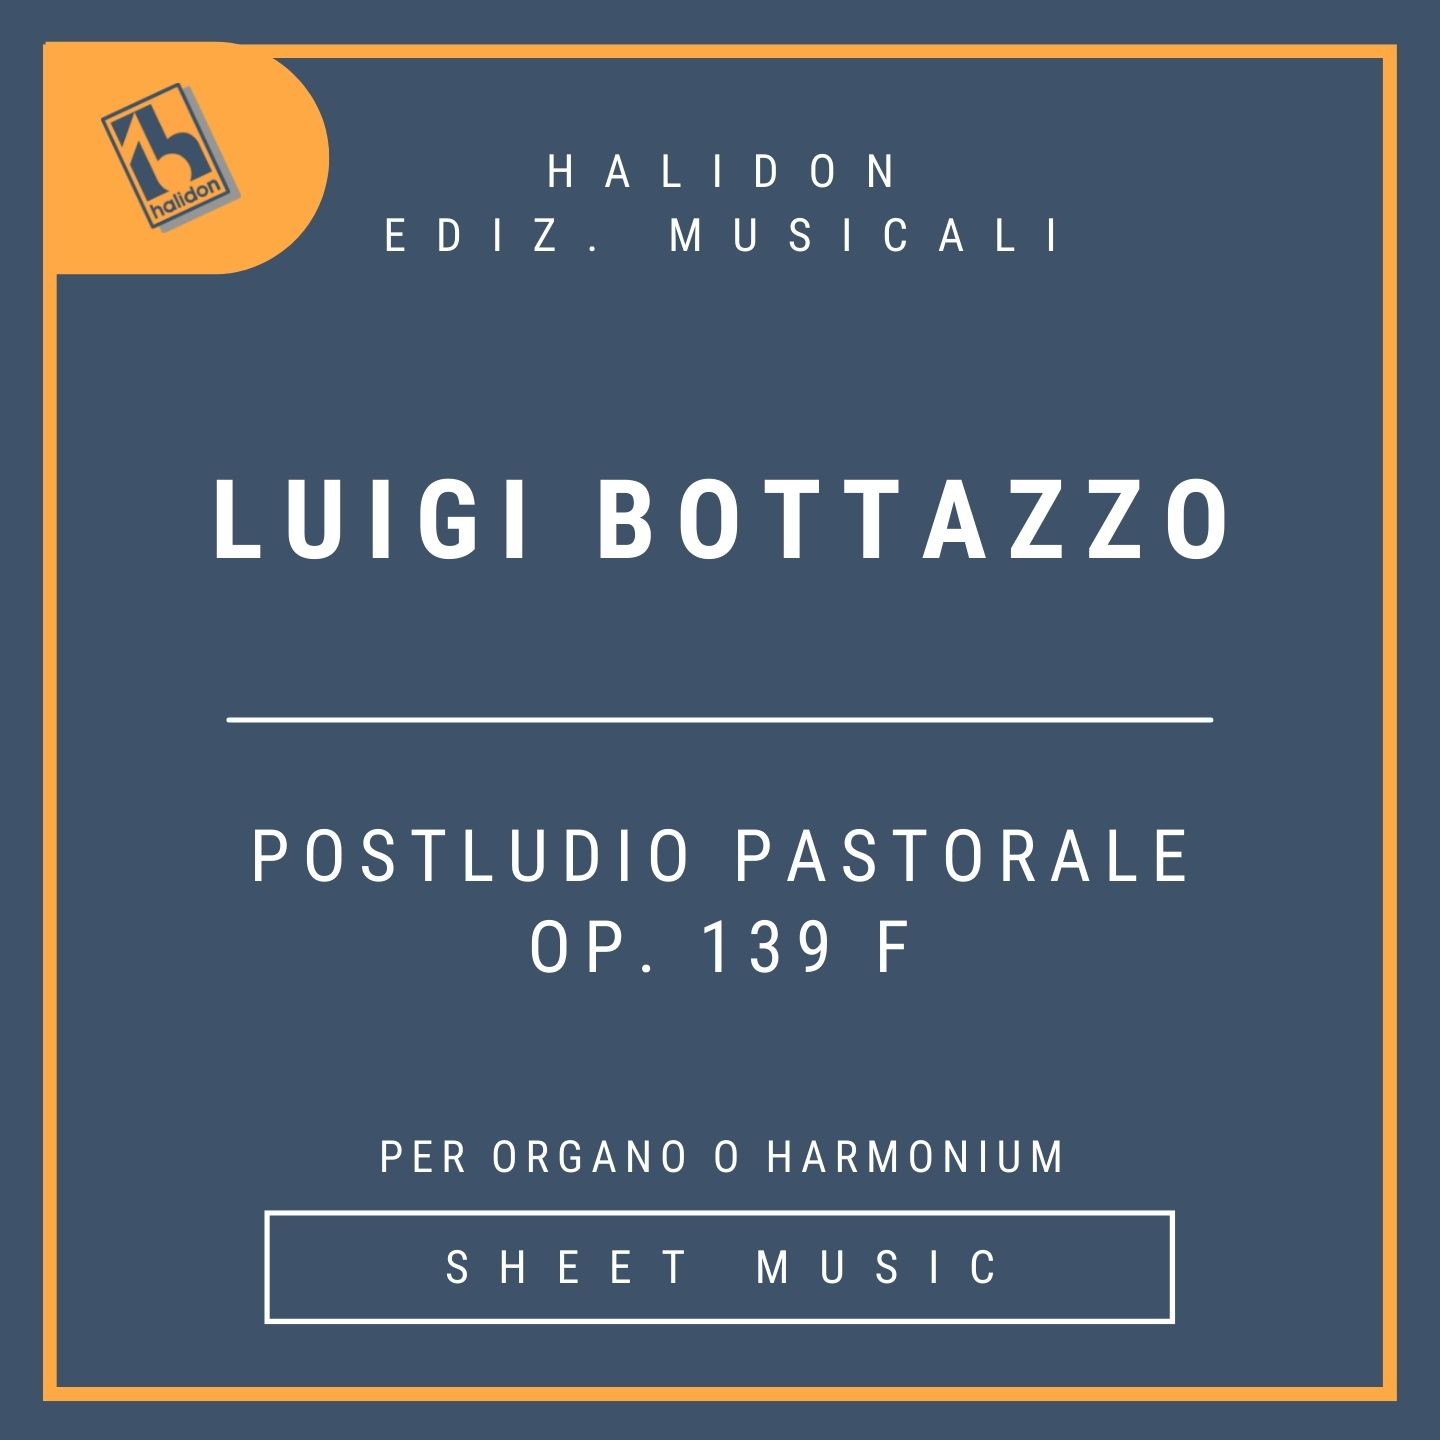 Luigi Bottazzo - Postludio pastorale for organ op. 139 f